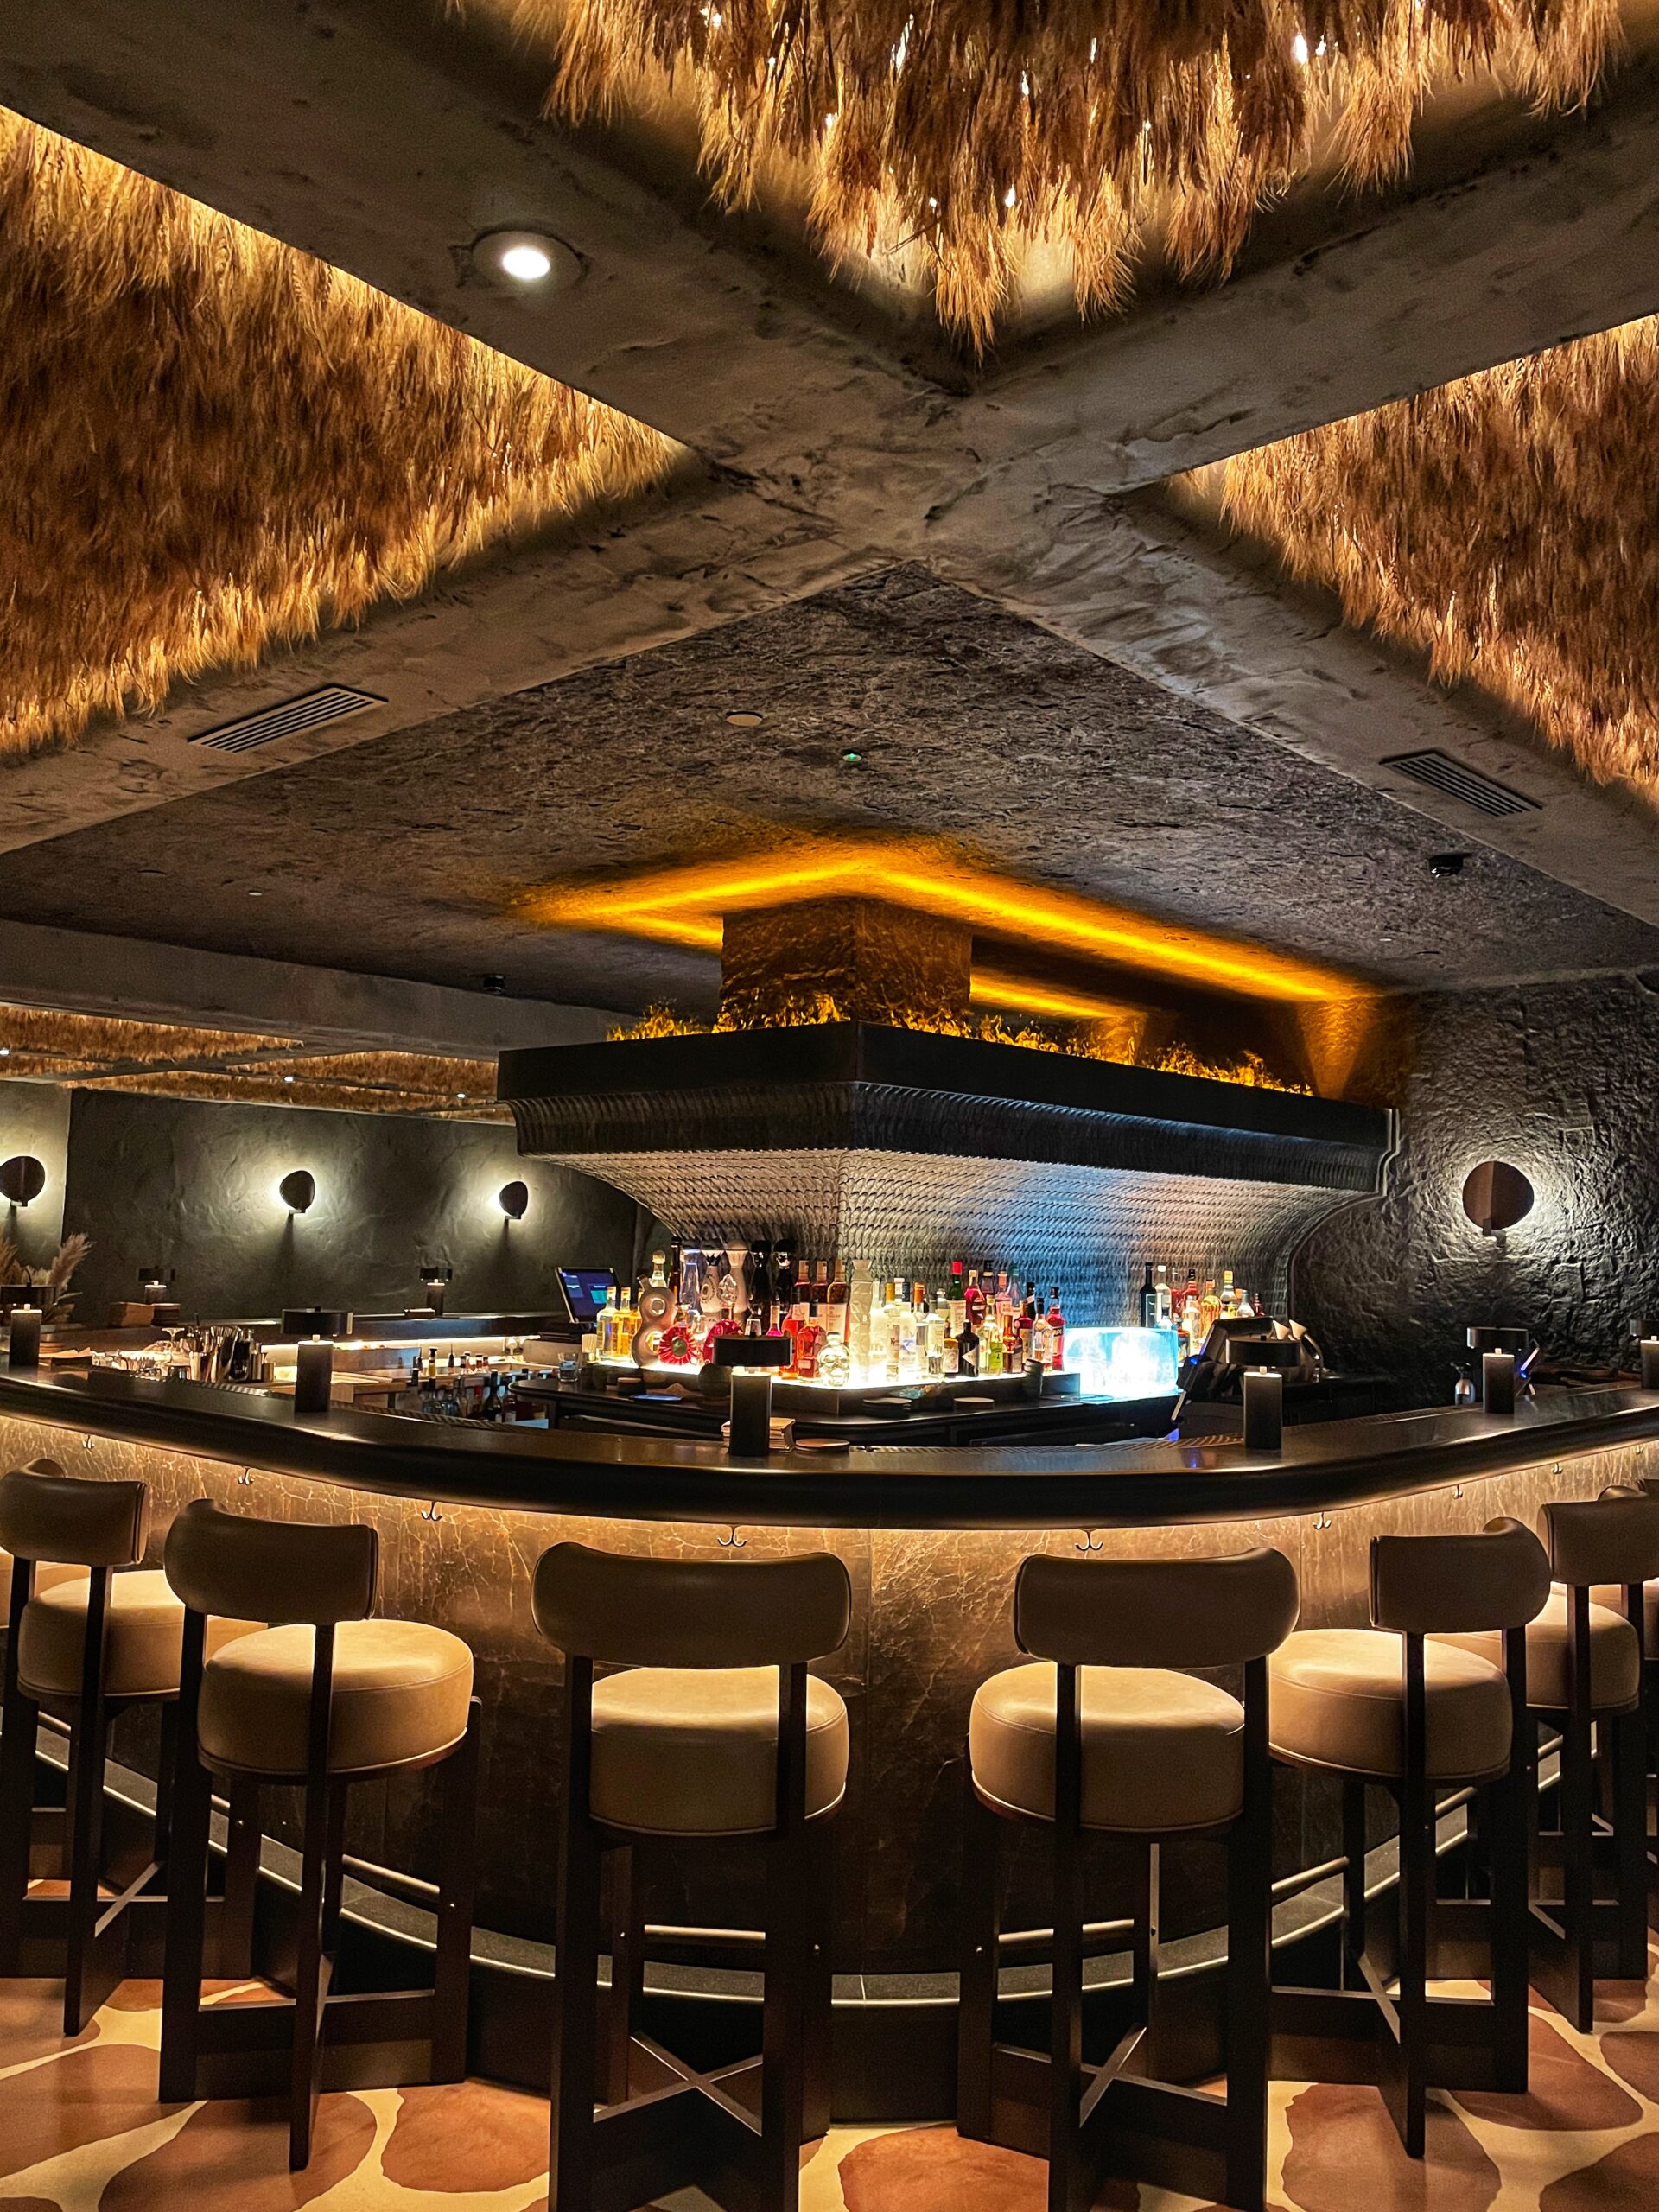 Inside Fenix's lavish bar area.